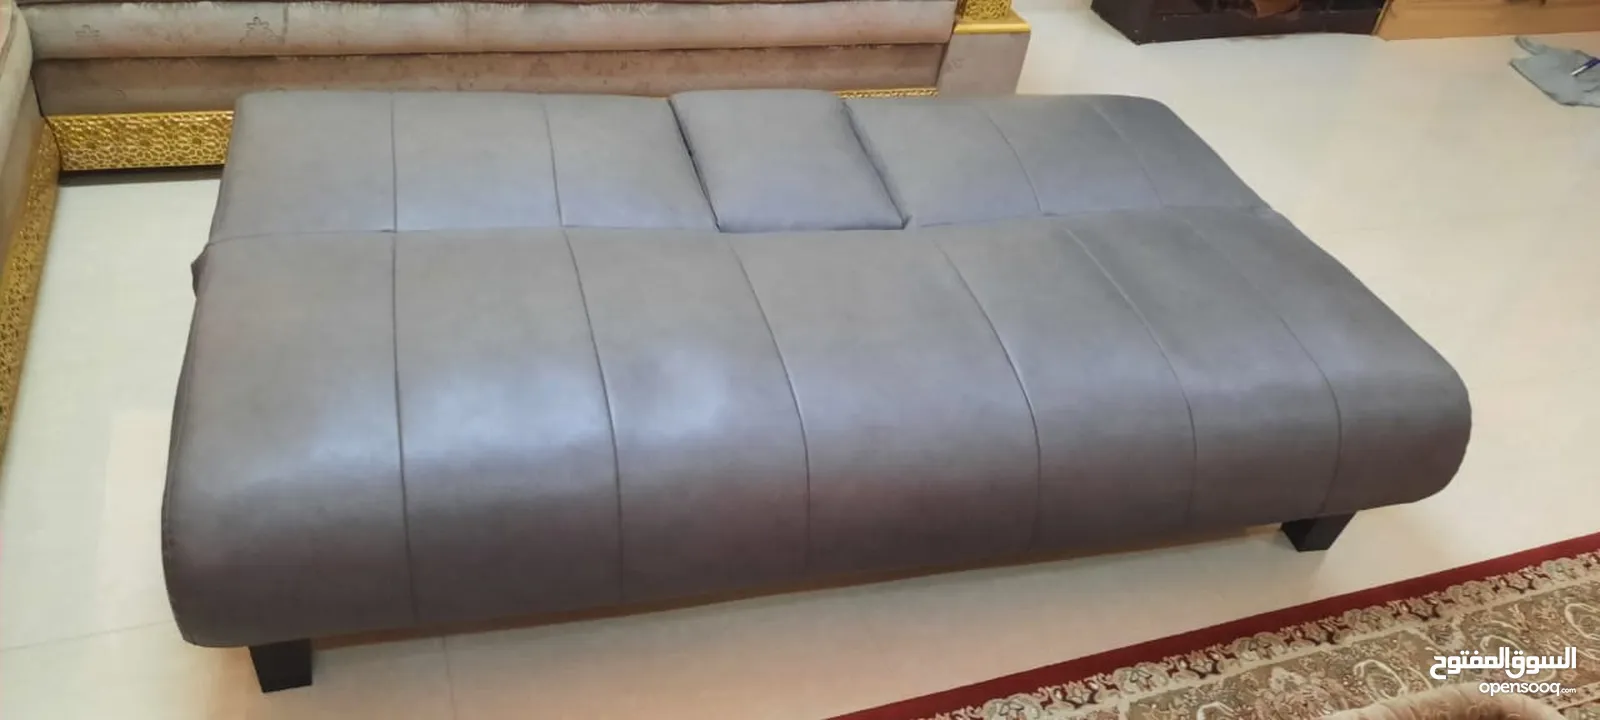 Pan Emirates bedcom sofa